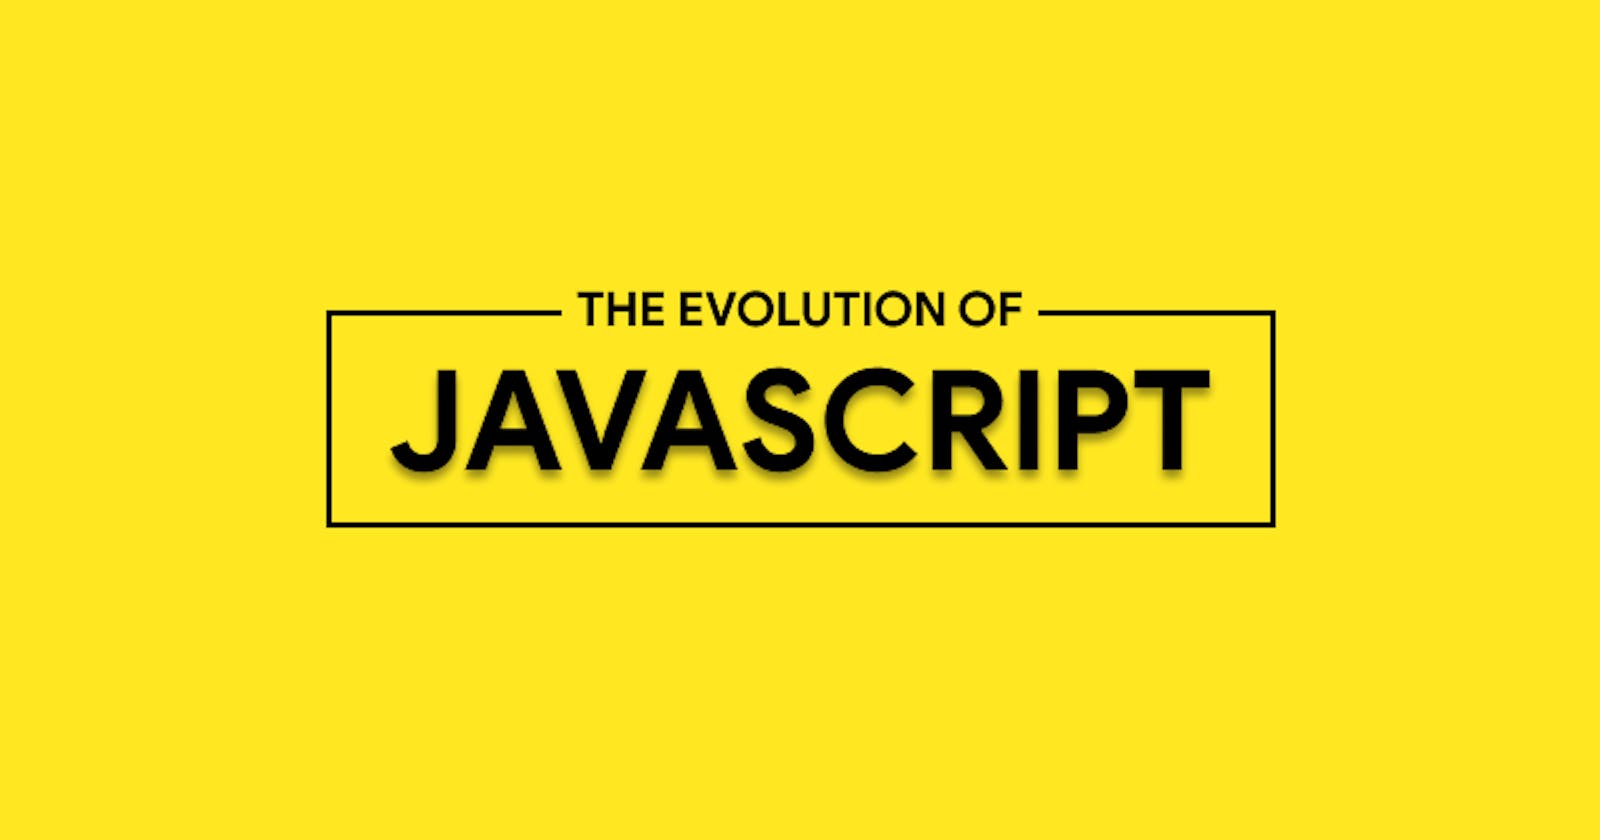 The Evolution of JavaScript